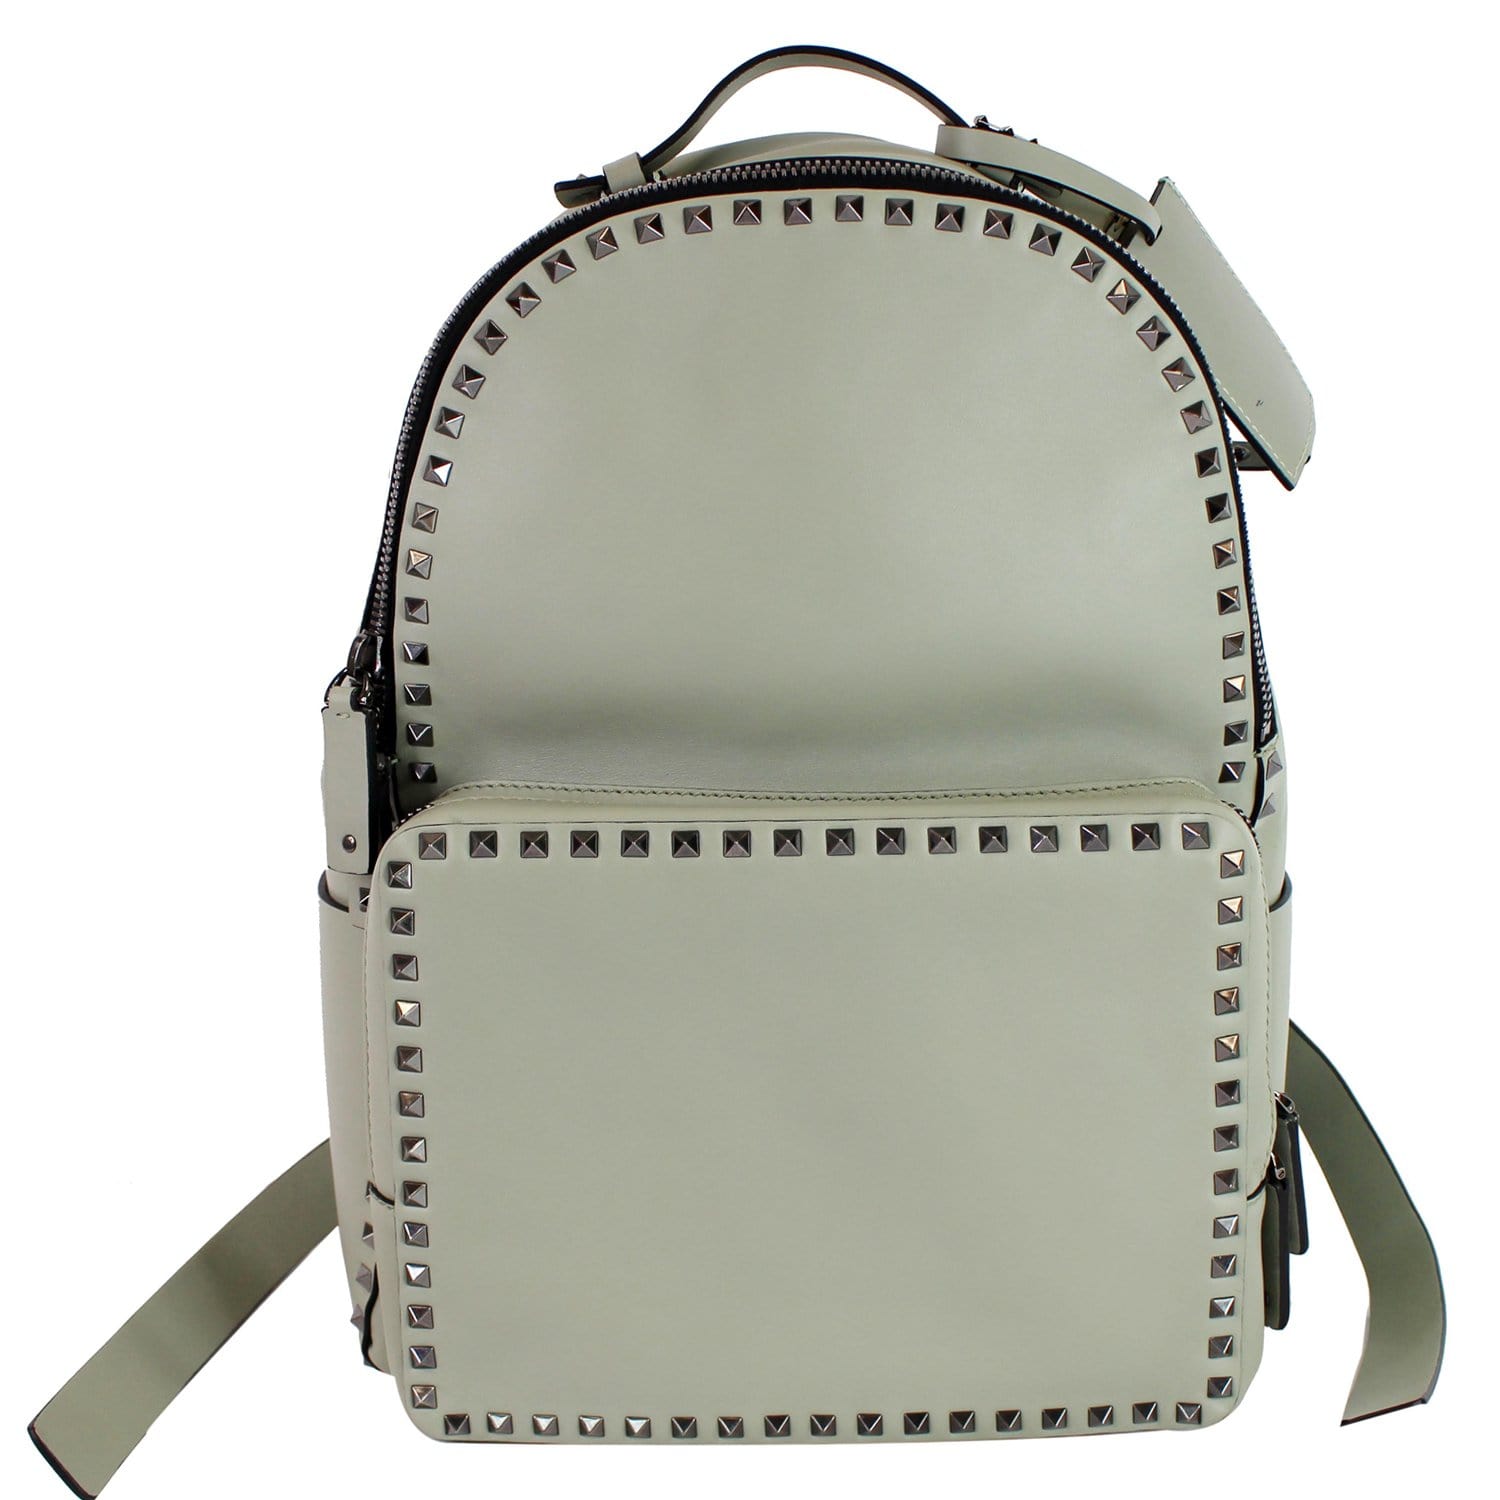 VALENTINO Garavani Rockstud Leather Backpack Light Green - 20% OFF